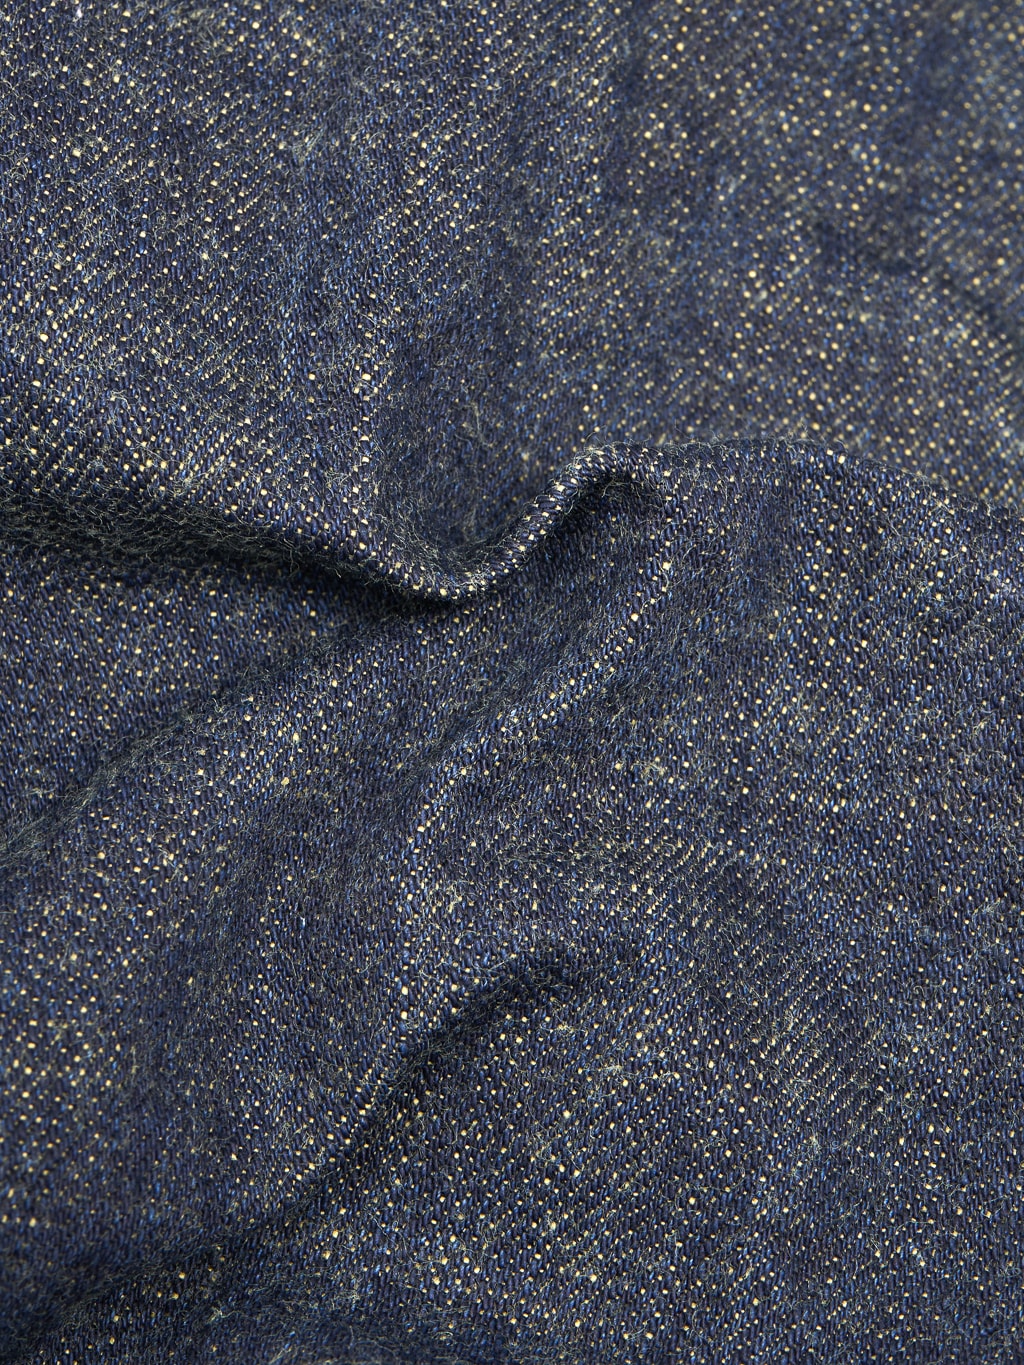 Tanuki soga selvedge denim type II jacket cotton fabric texture